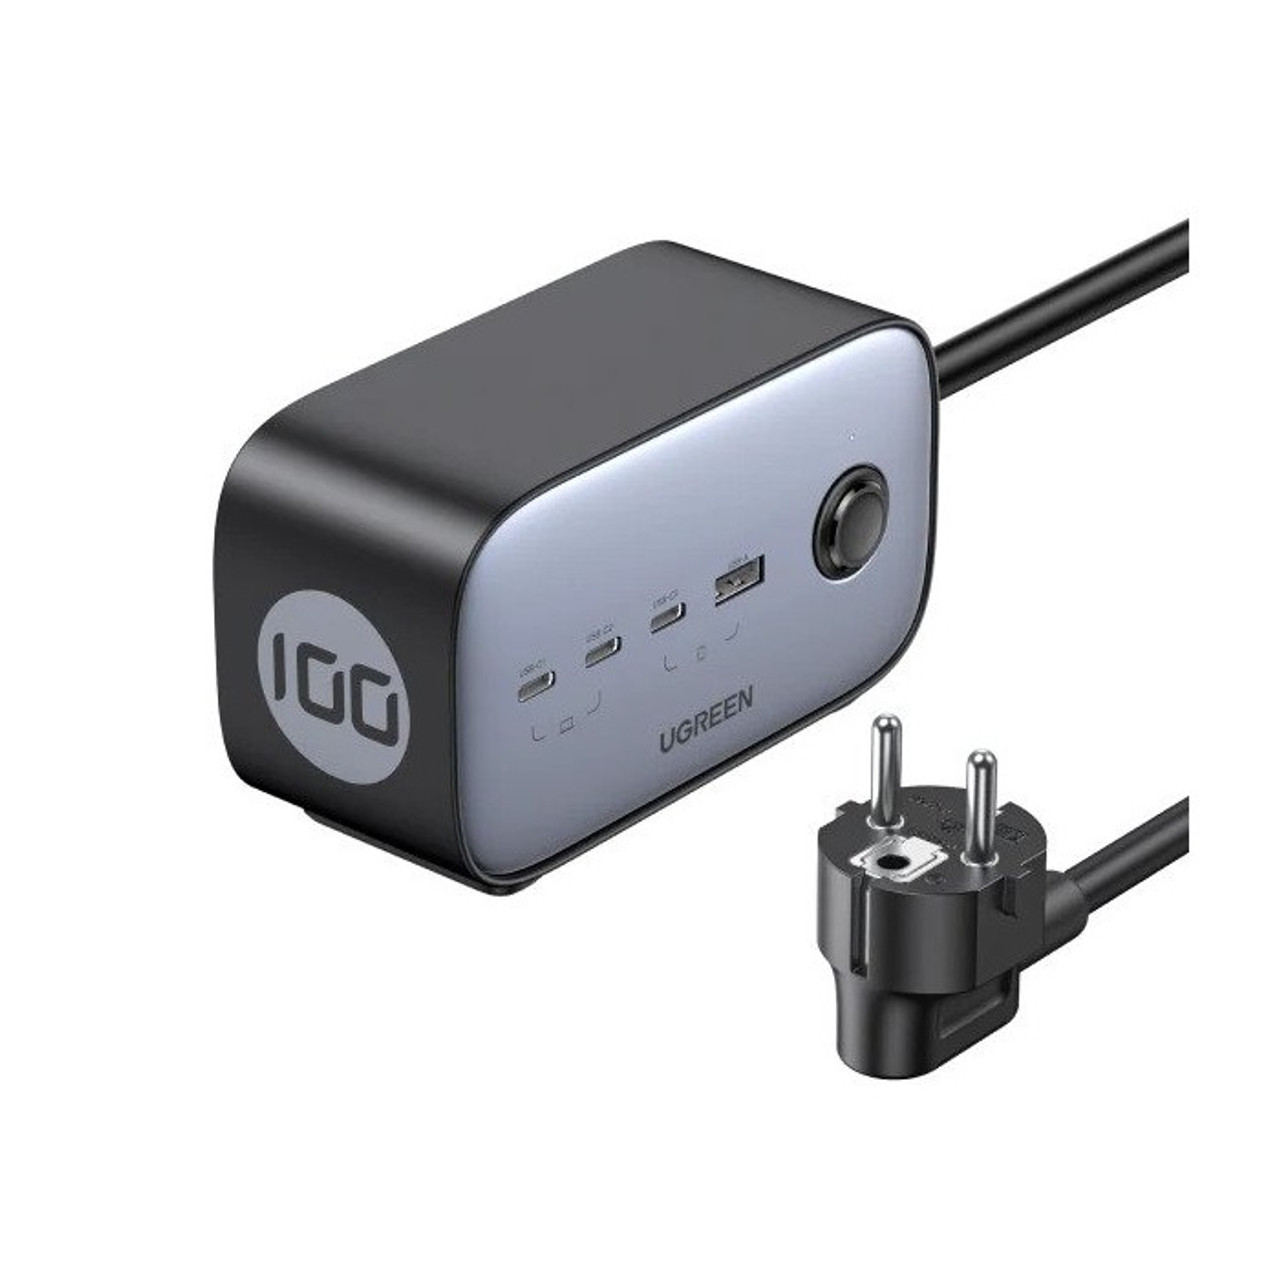 Ugreen chargeur mural GaN USB C / USB multiprise AC noir (CD270) - ✓